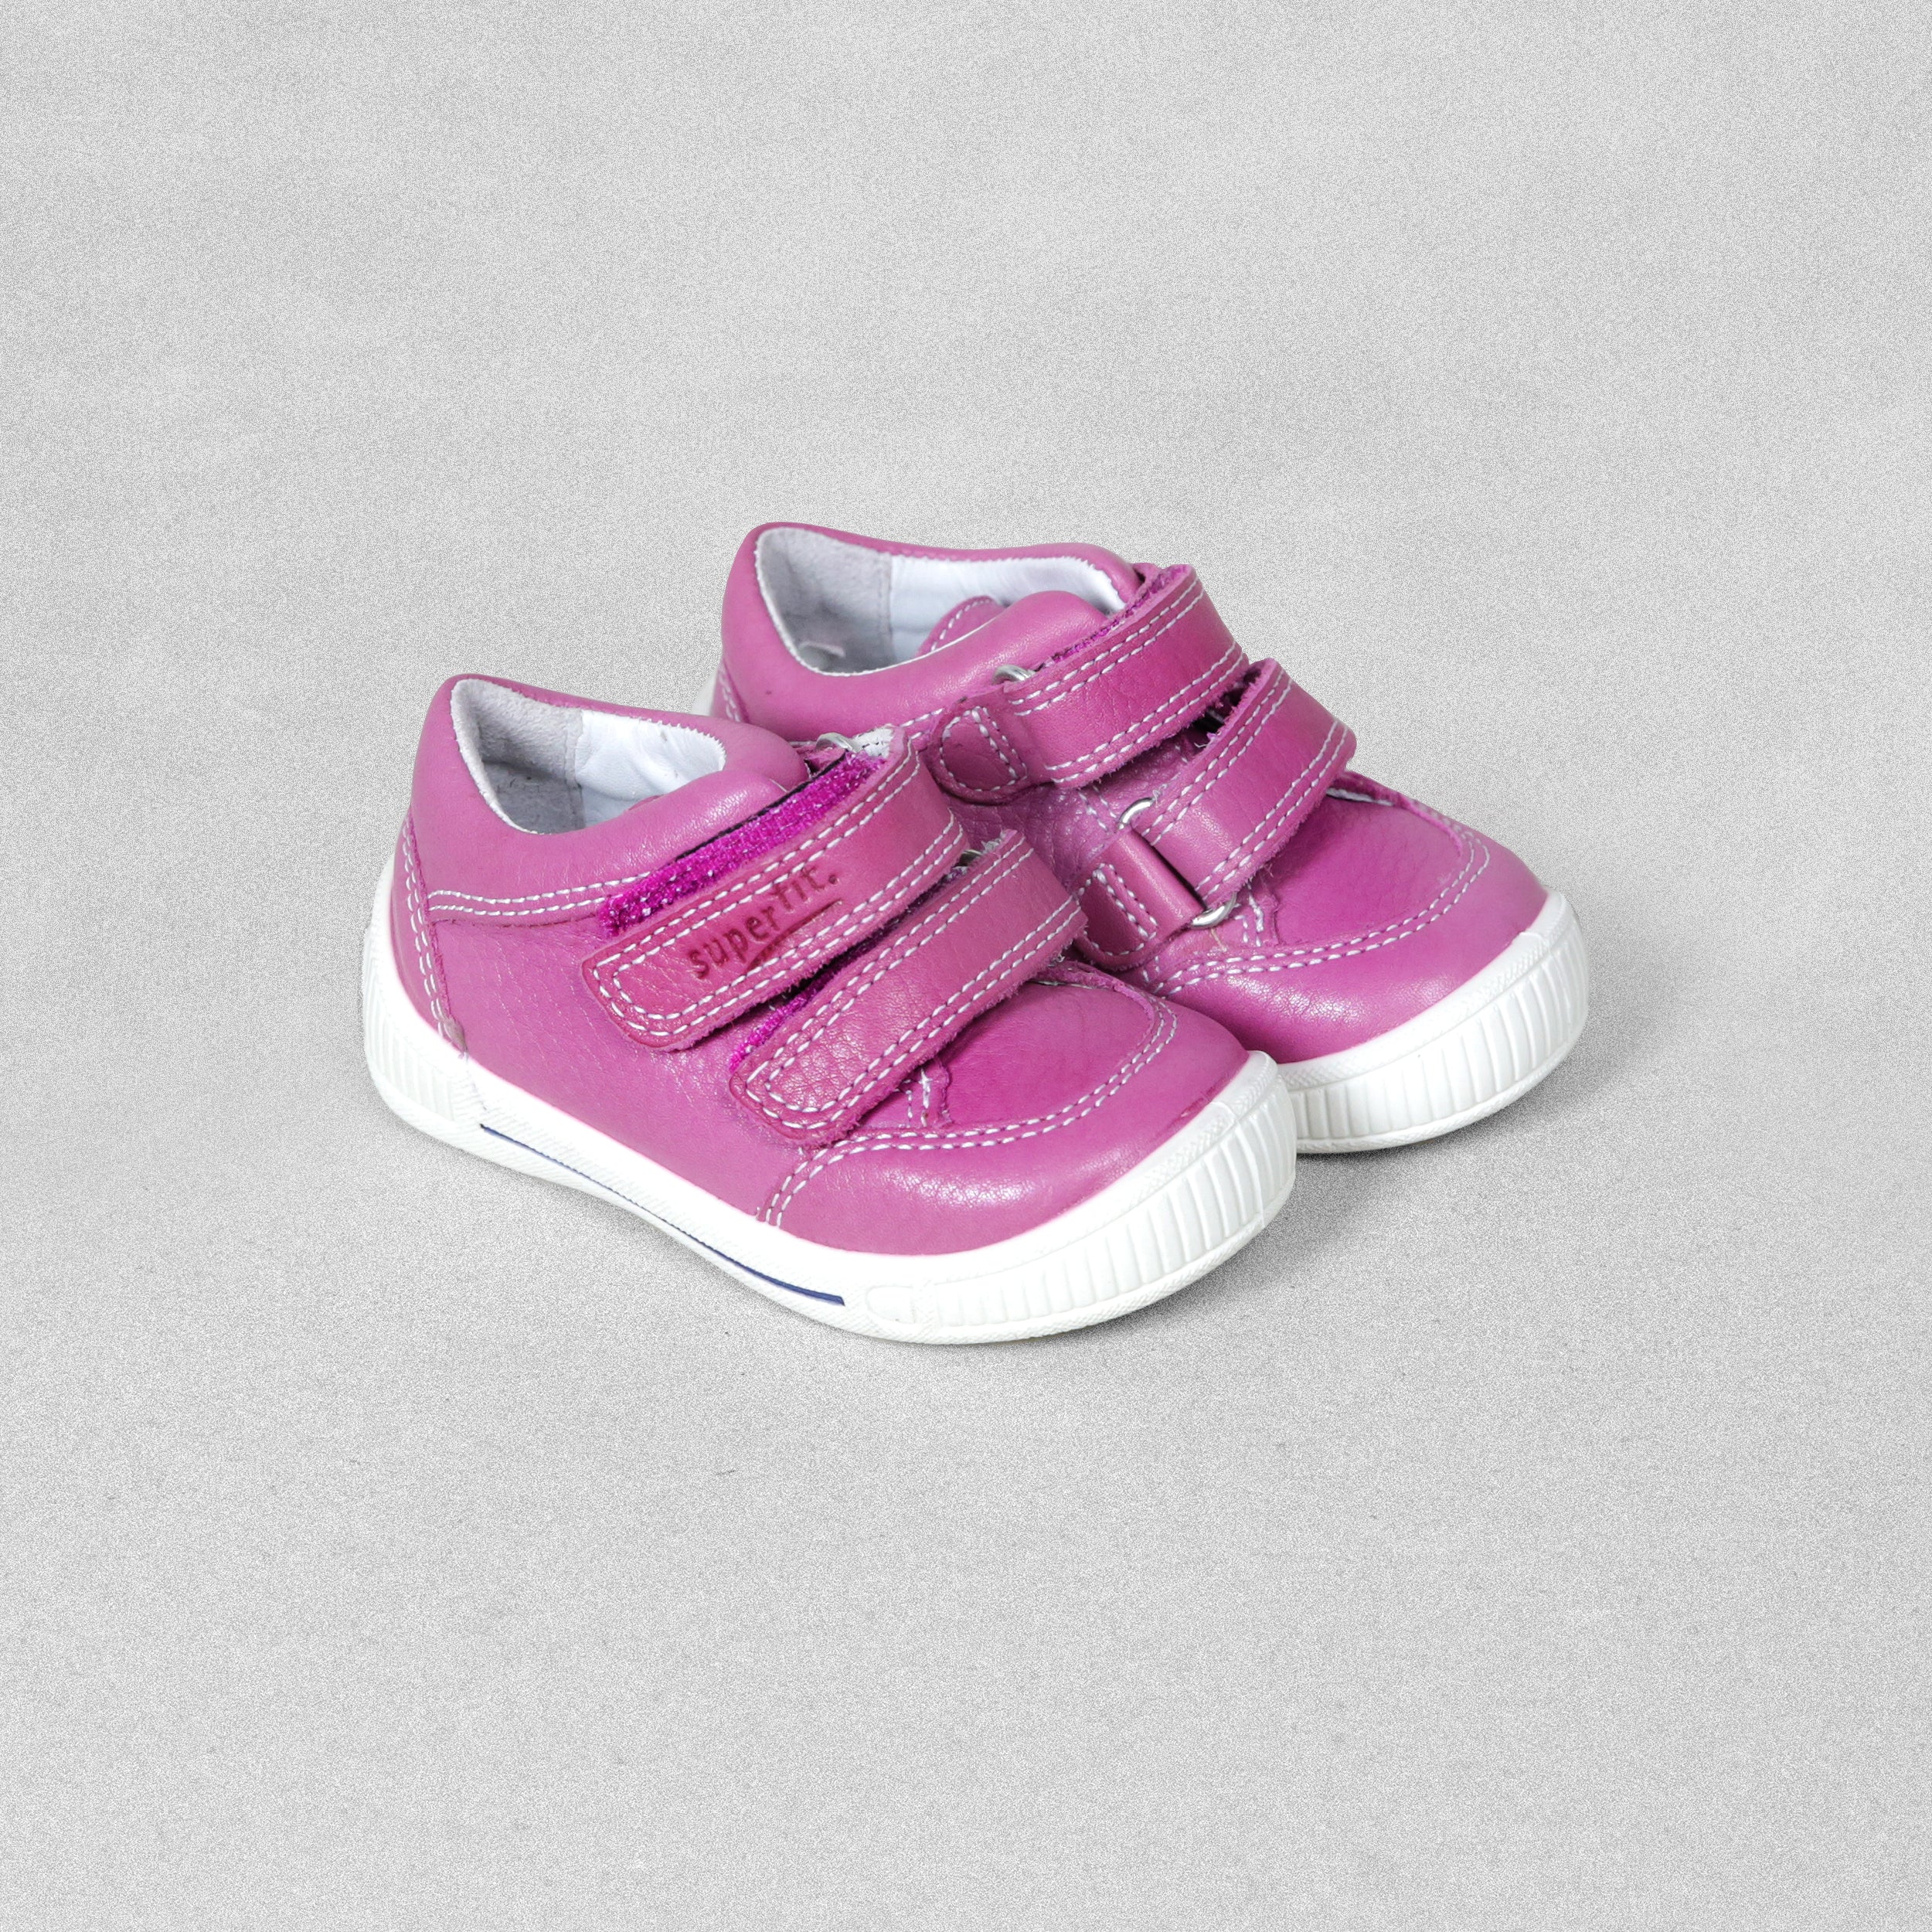 Superfit Girls' Pink Leather Shoe Child UK 3 / EU 19